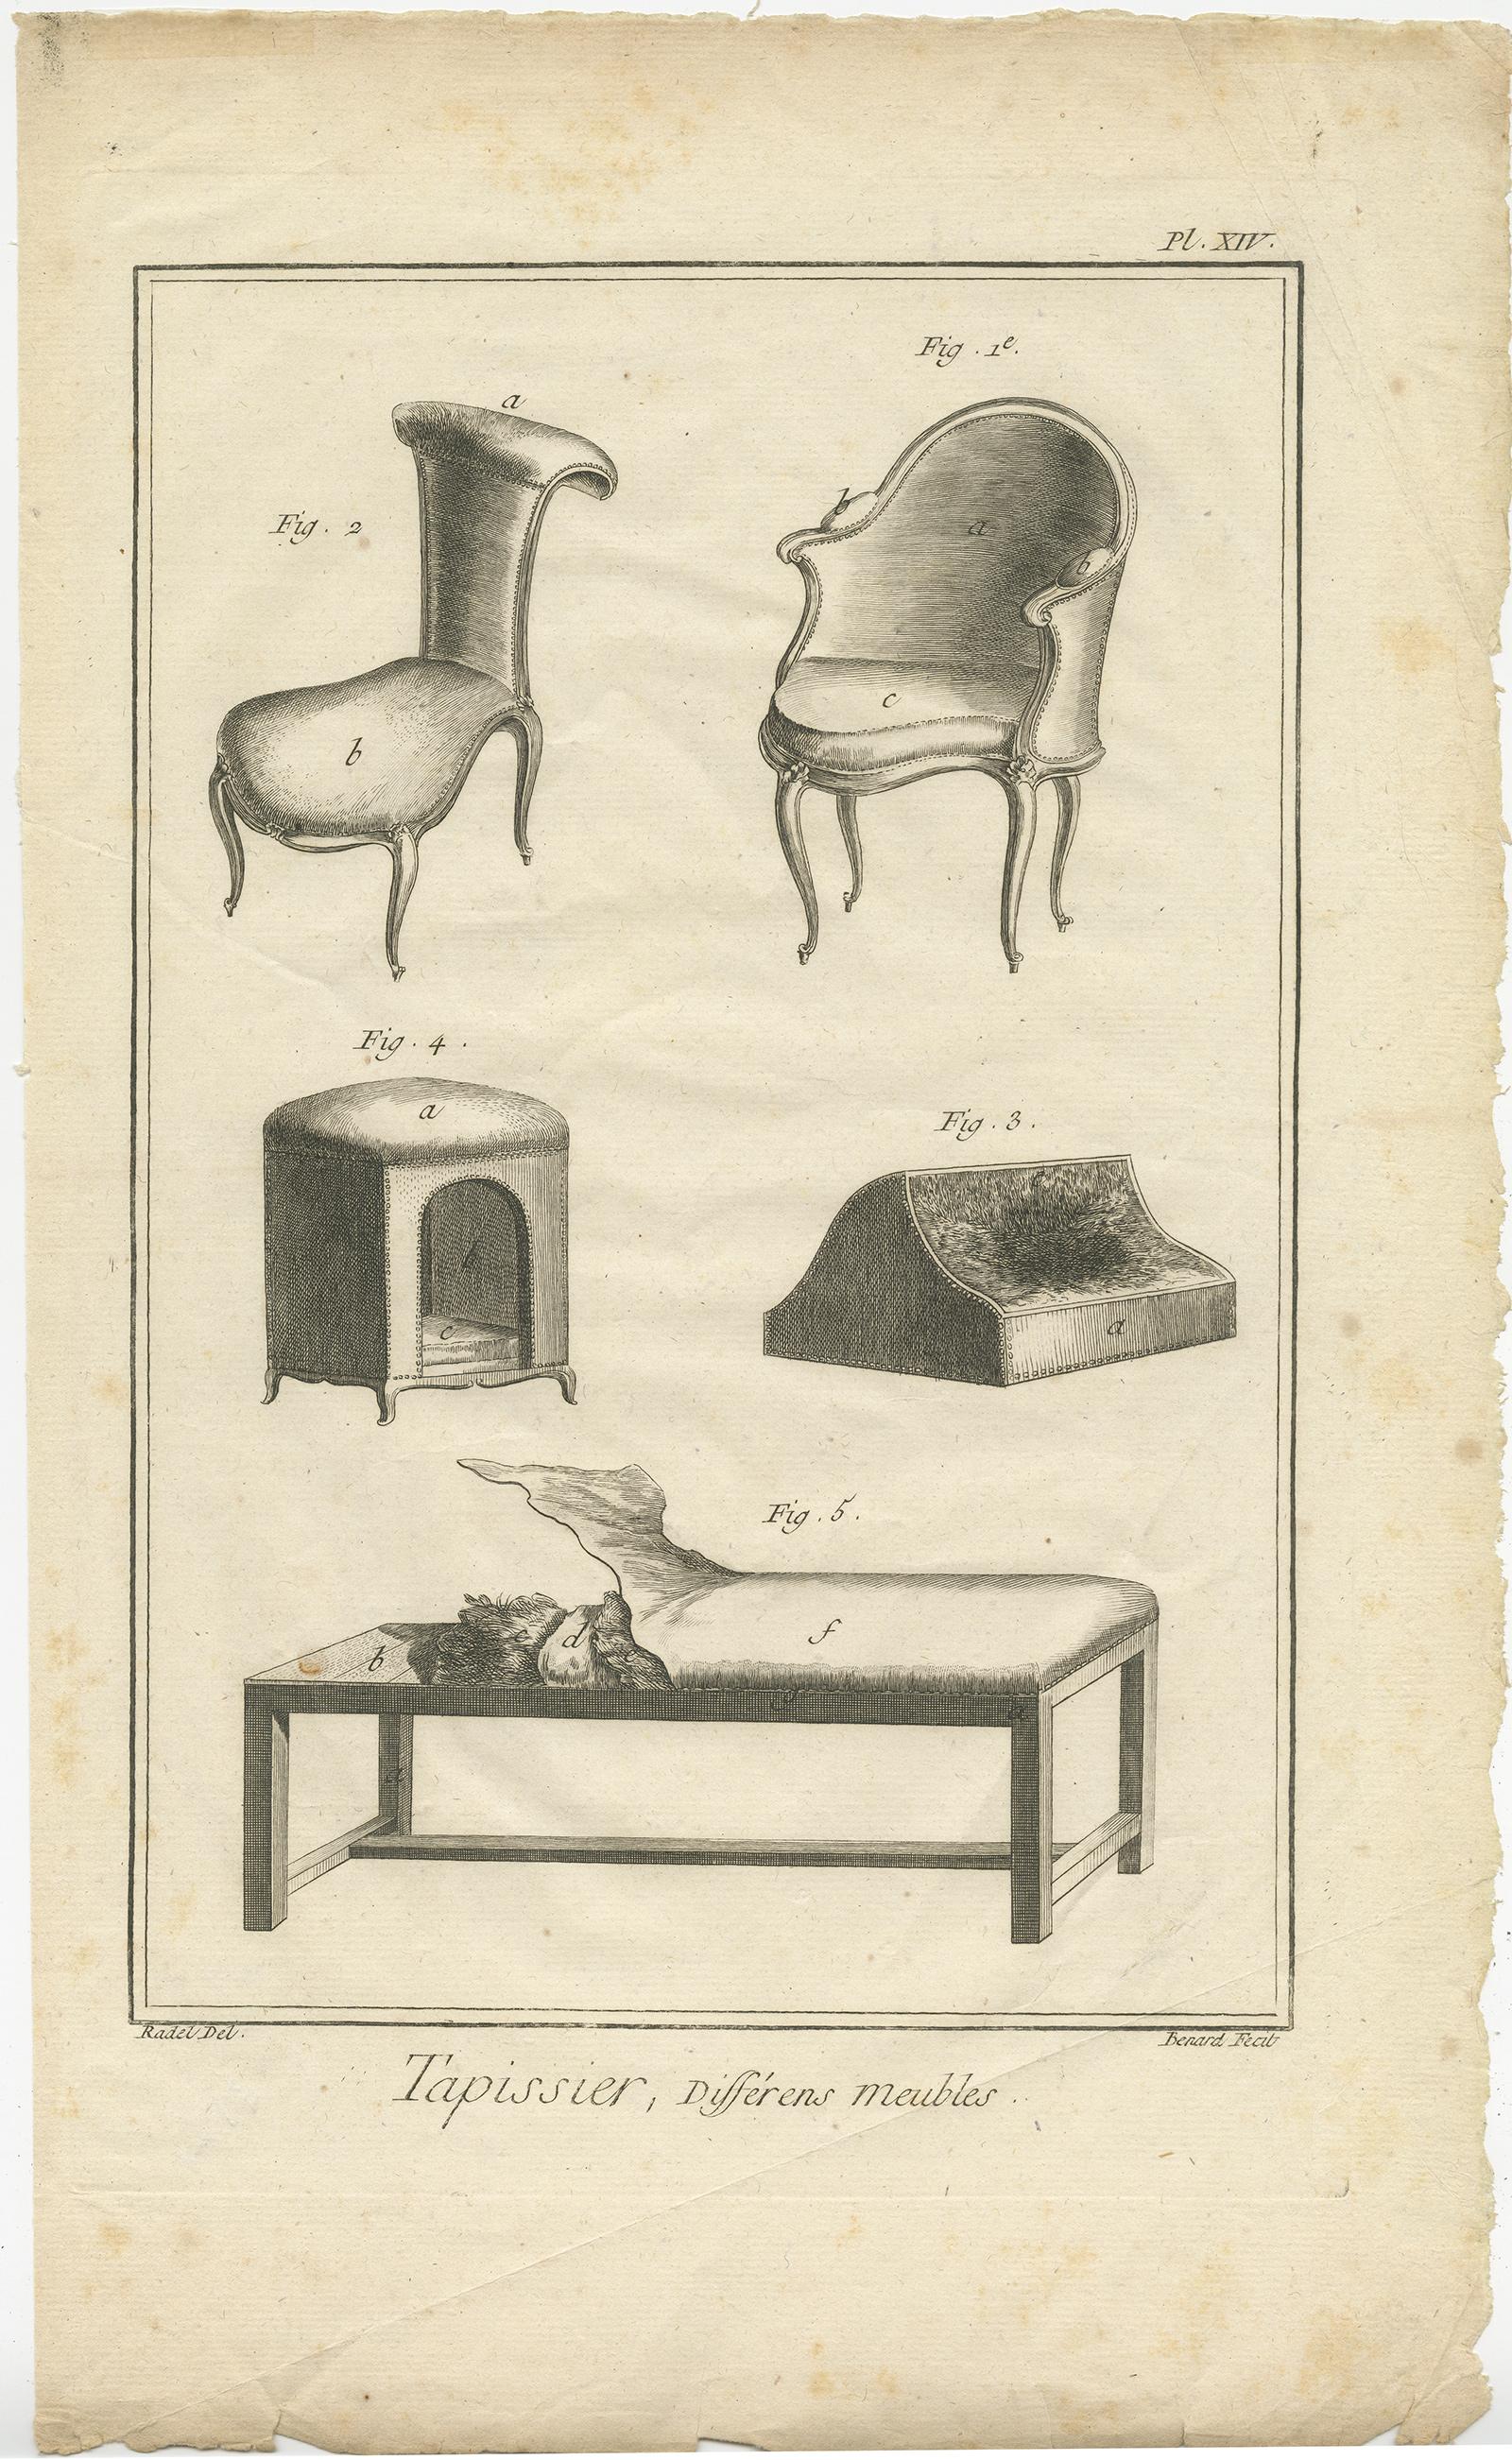 Set of five antique prints of various furniture. Published by Benard after Radel, circa 1785.